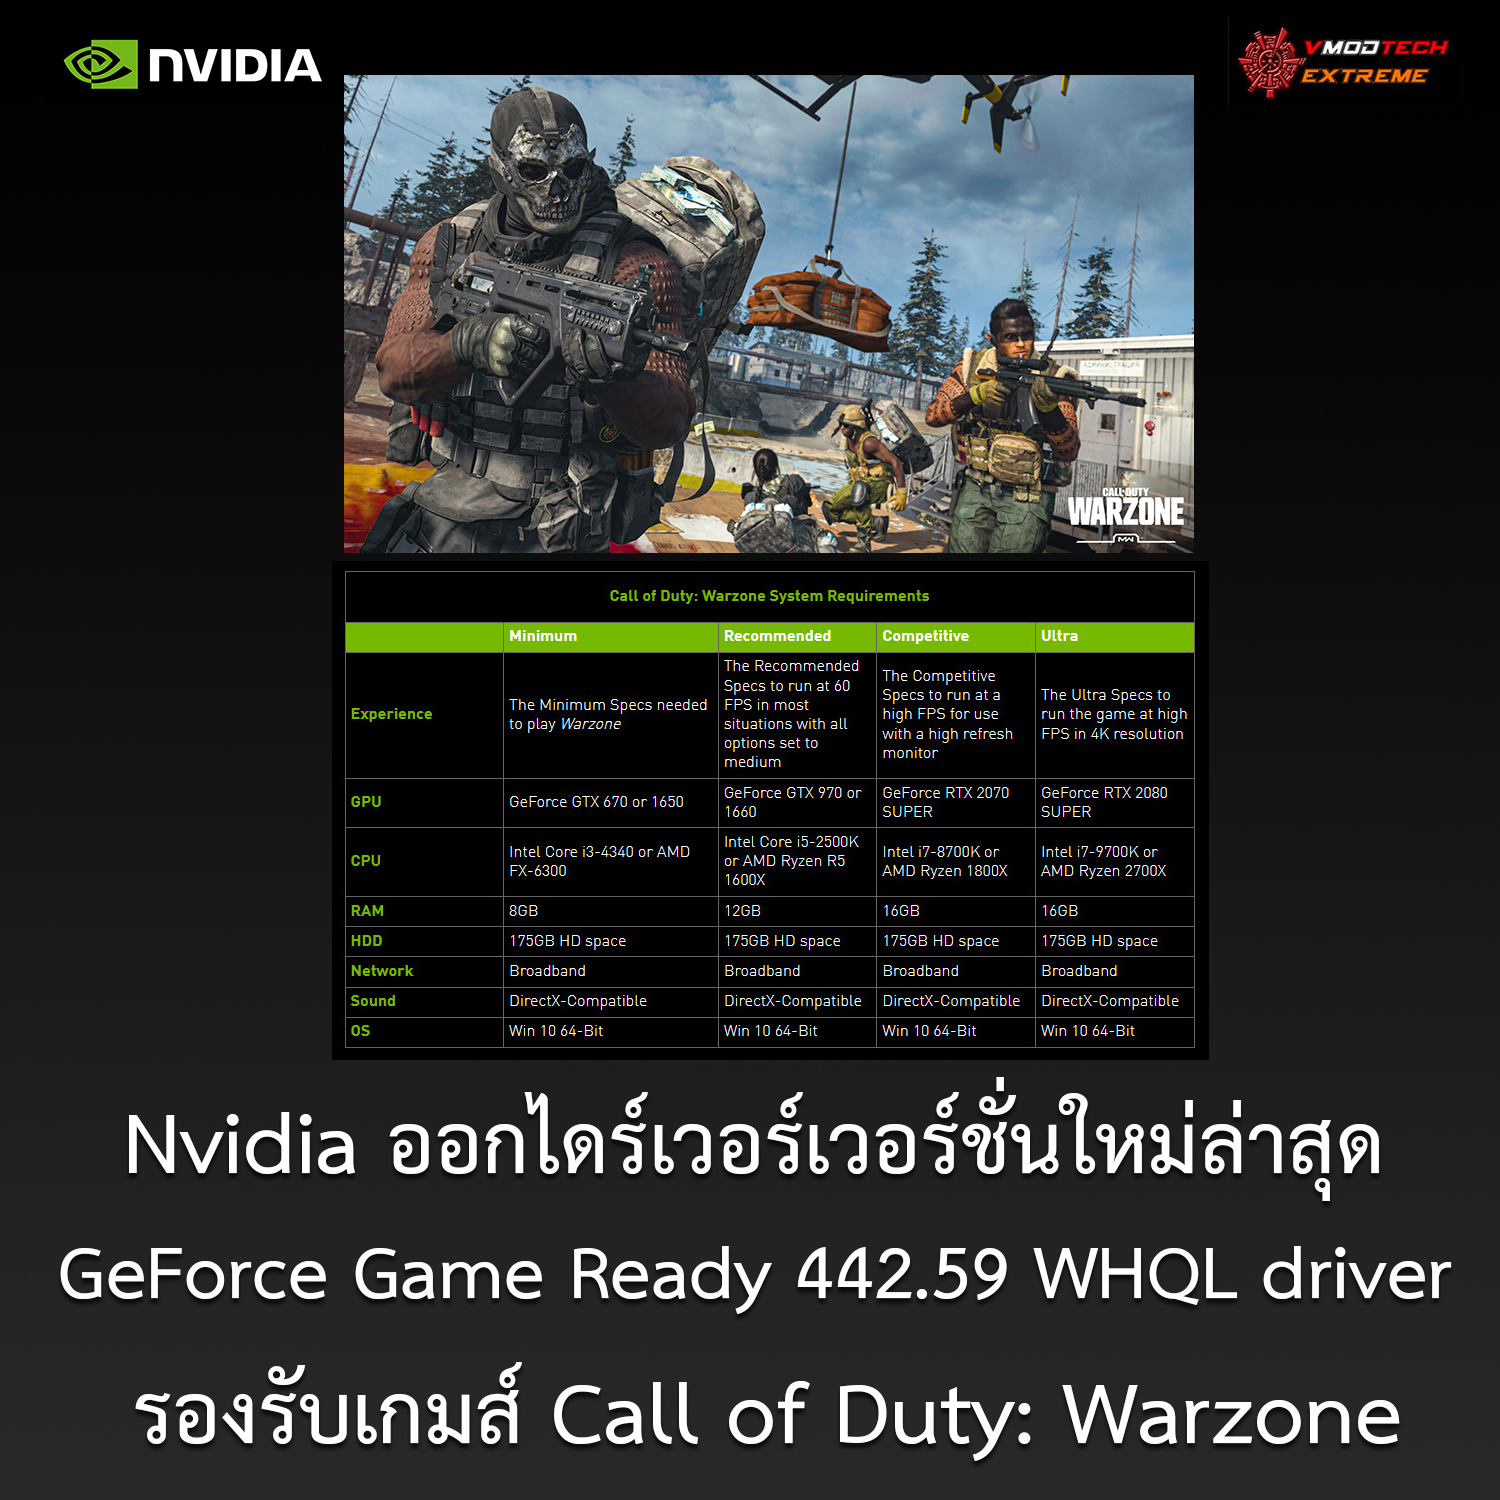 geforce game ready 44259 whql driver Nvidia ออกไดร์เวอร์เวอร์ชั่นใหม่ล่าสุด GeForce Game Ready 442.59 WHQL driver รองรับเกมส์ Call of Duty: Warzone